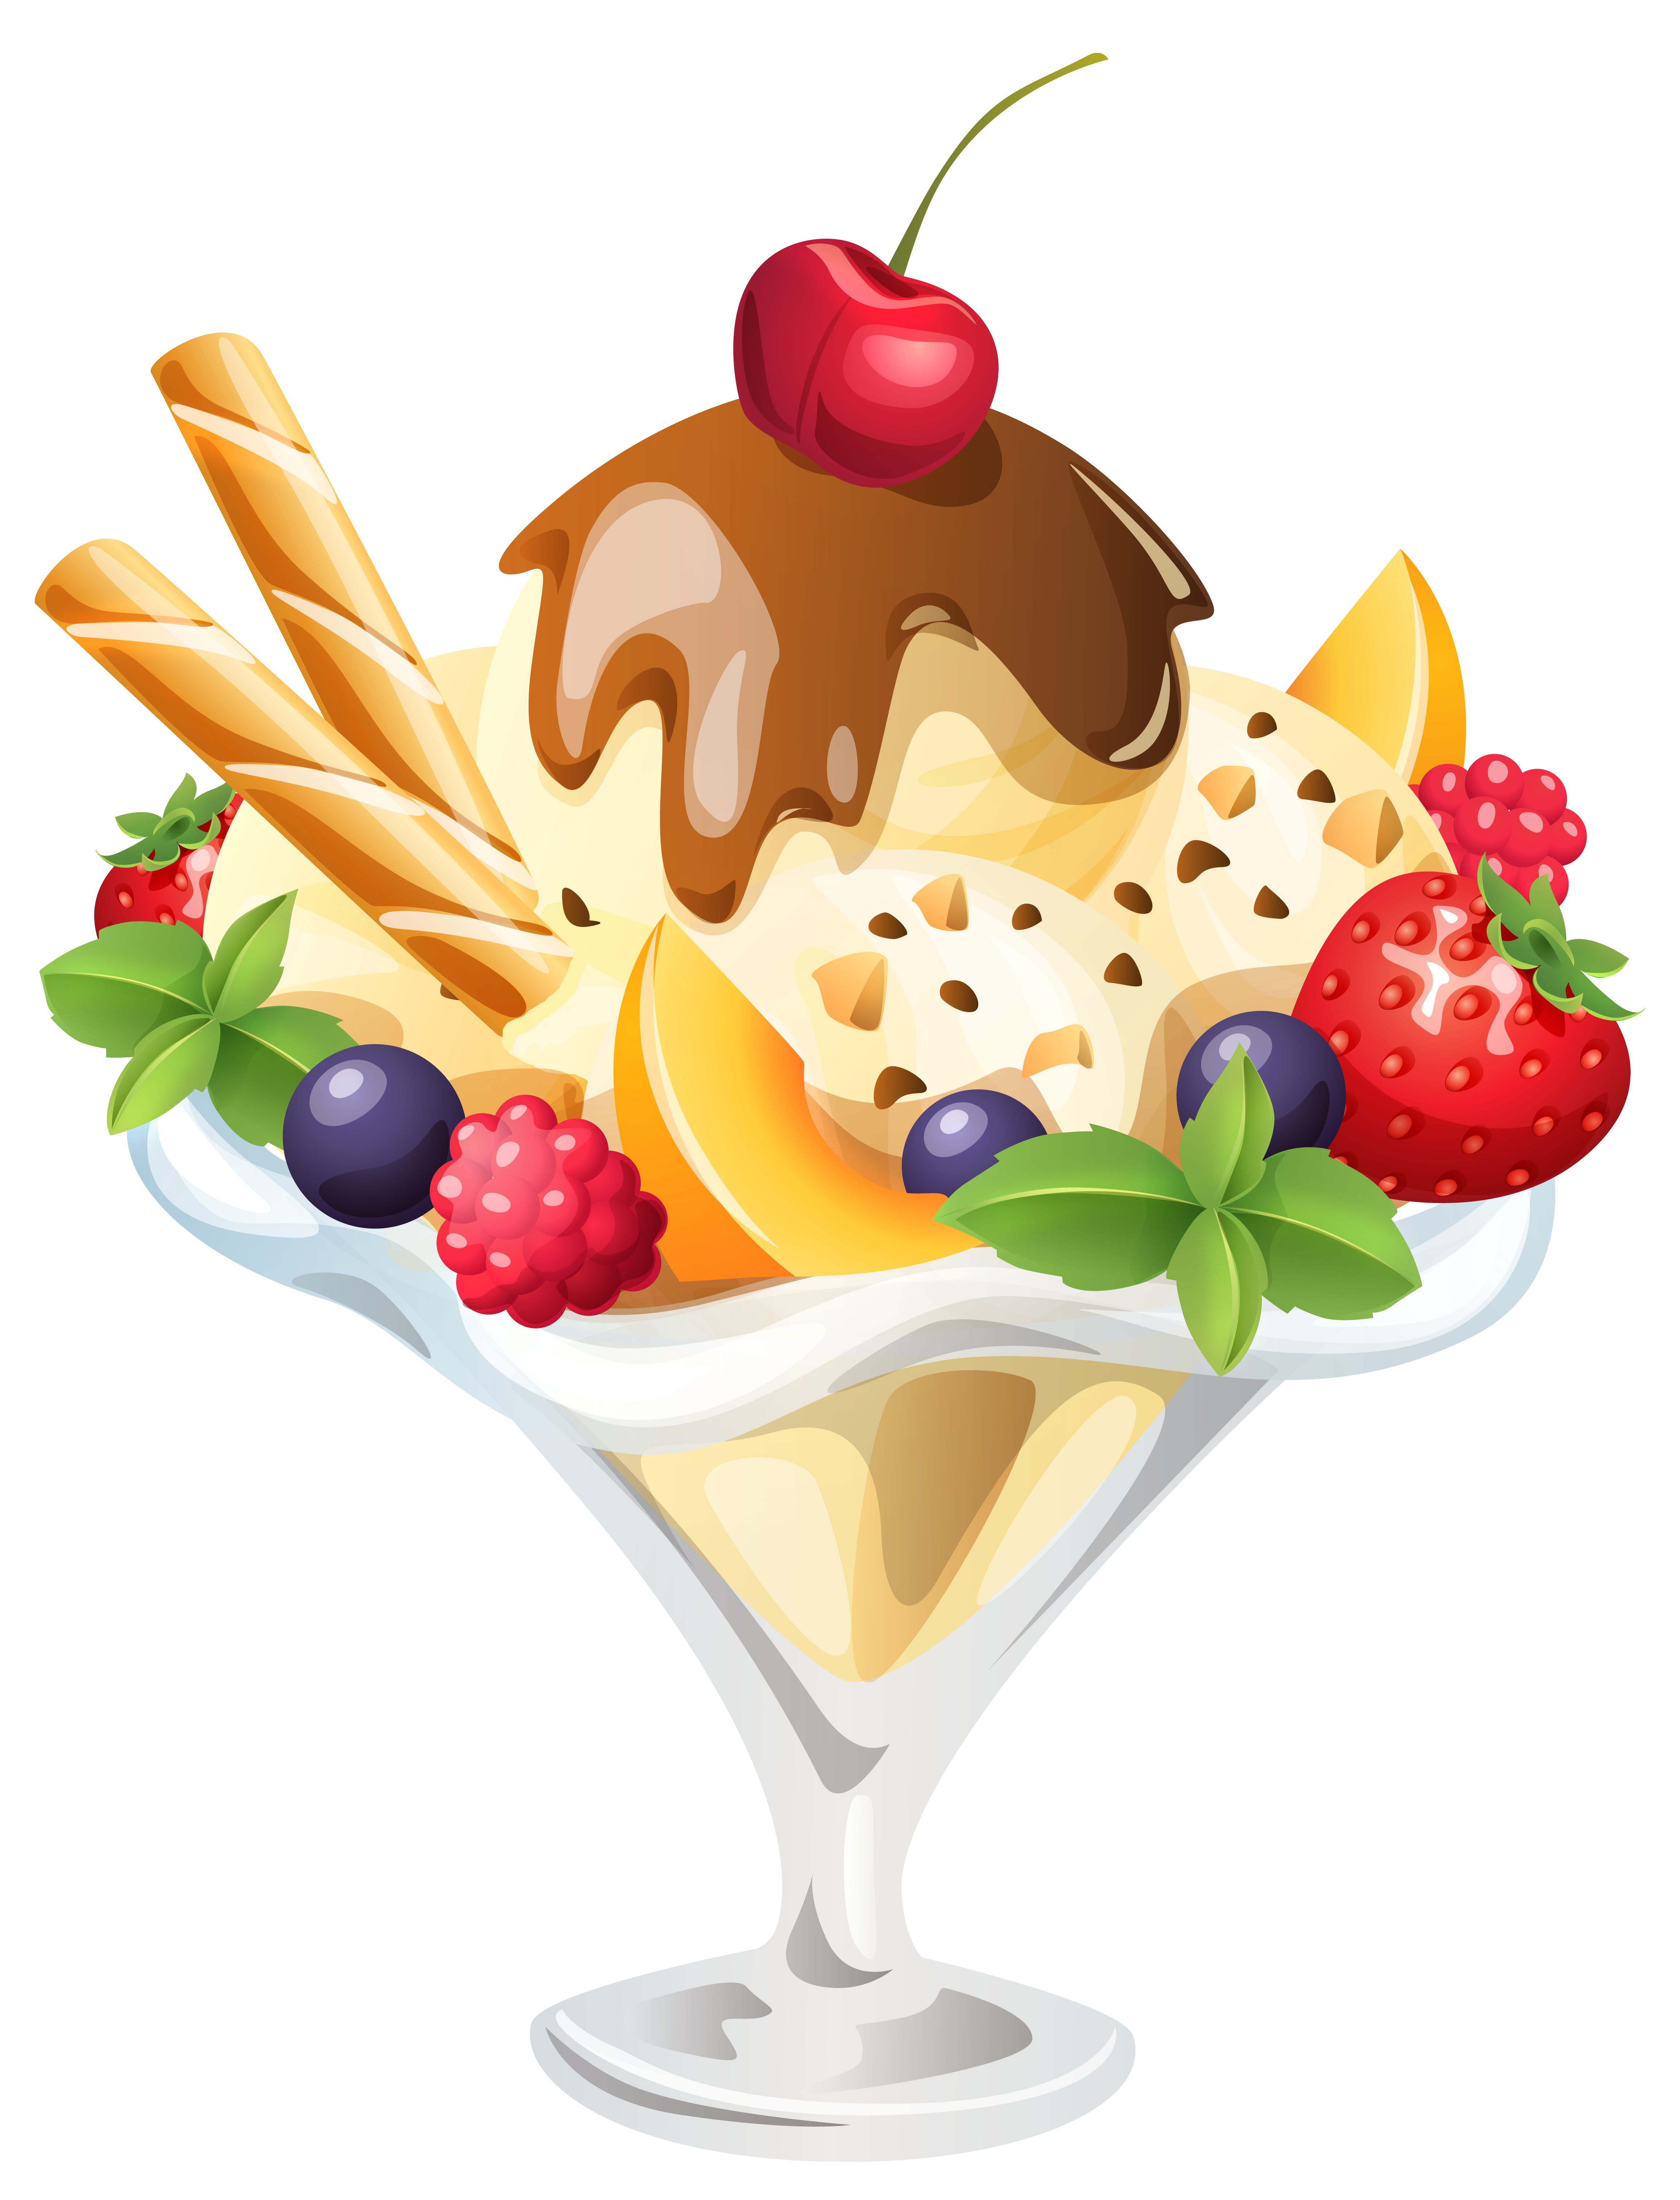 Ice Cream Sundae PNG Clipart Image.